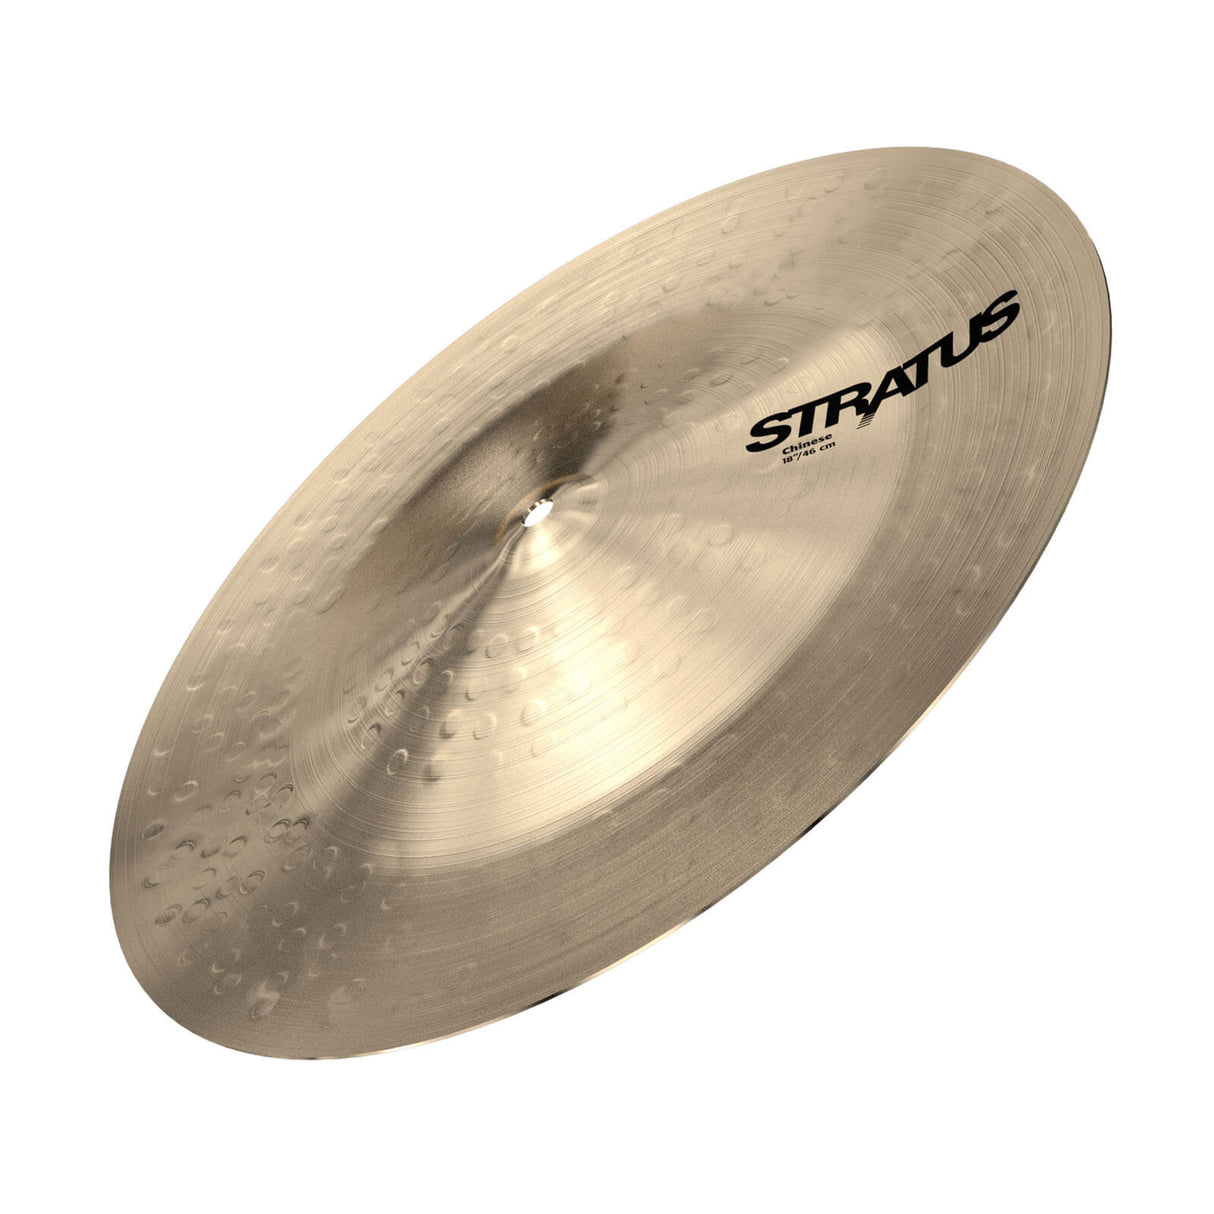 Sabian Stratus Chinese Cymbal 18"